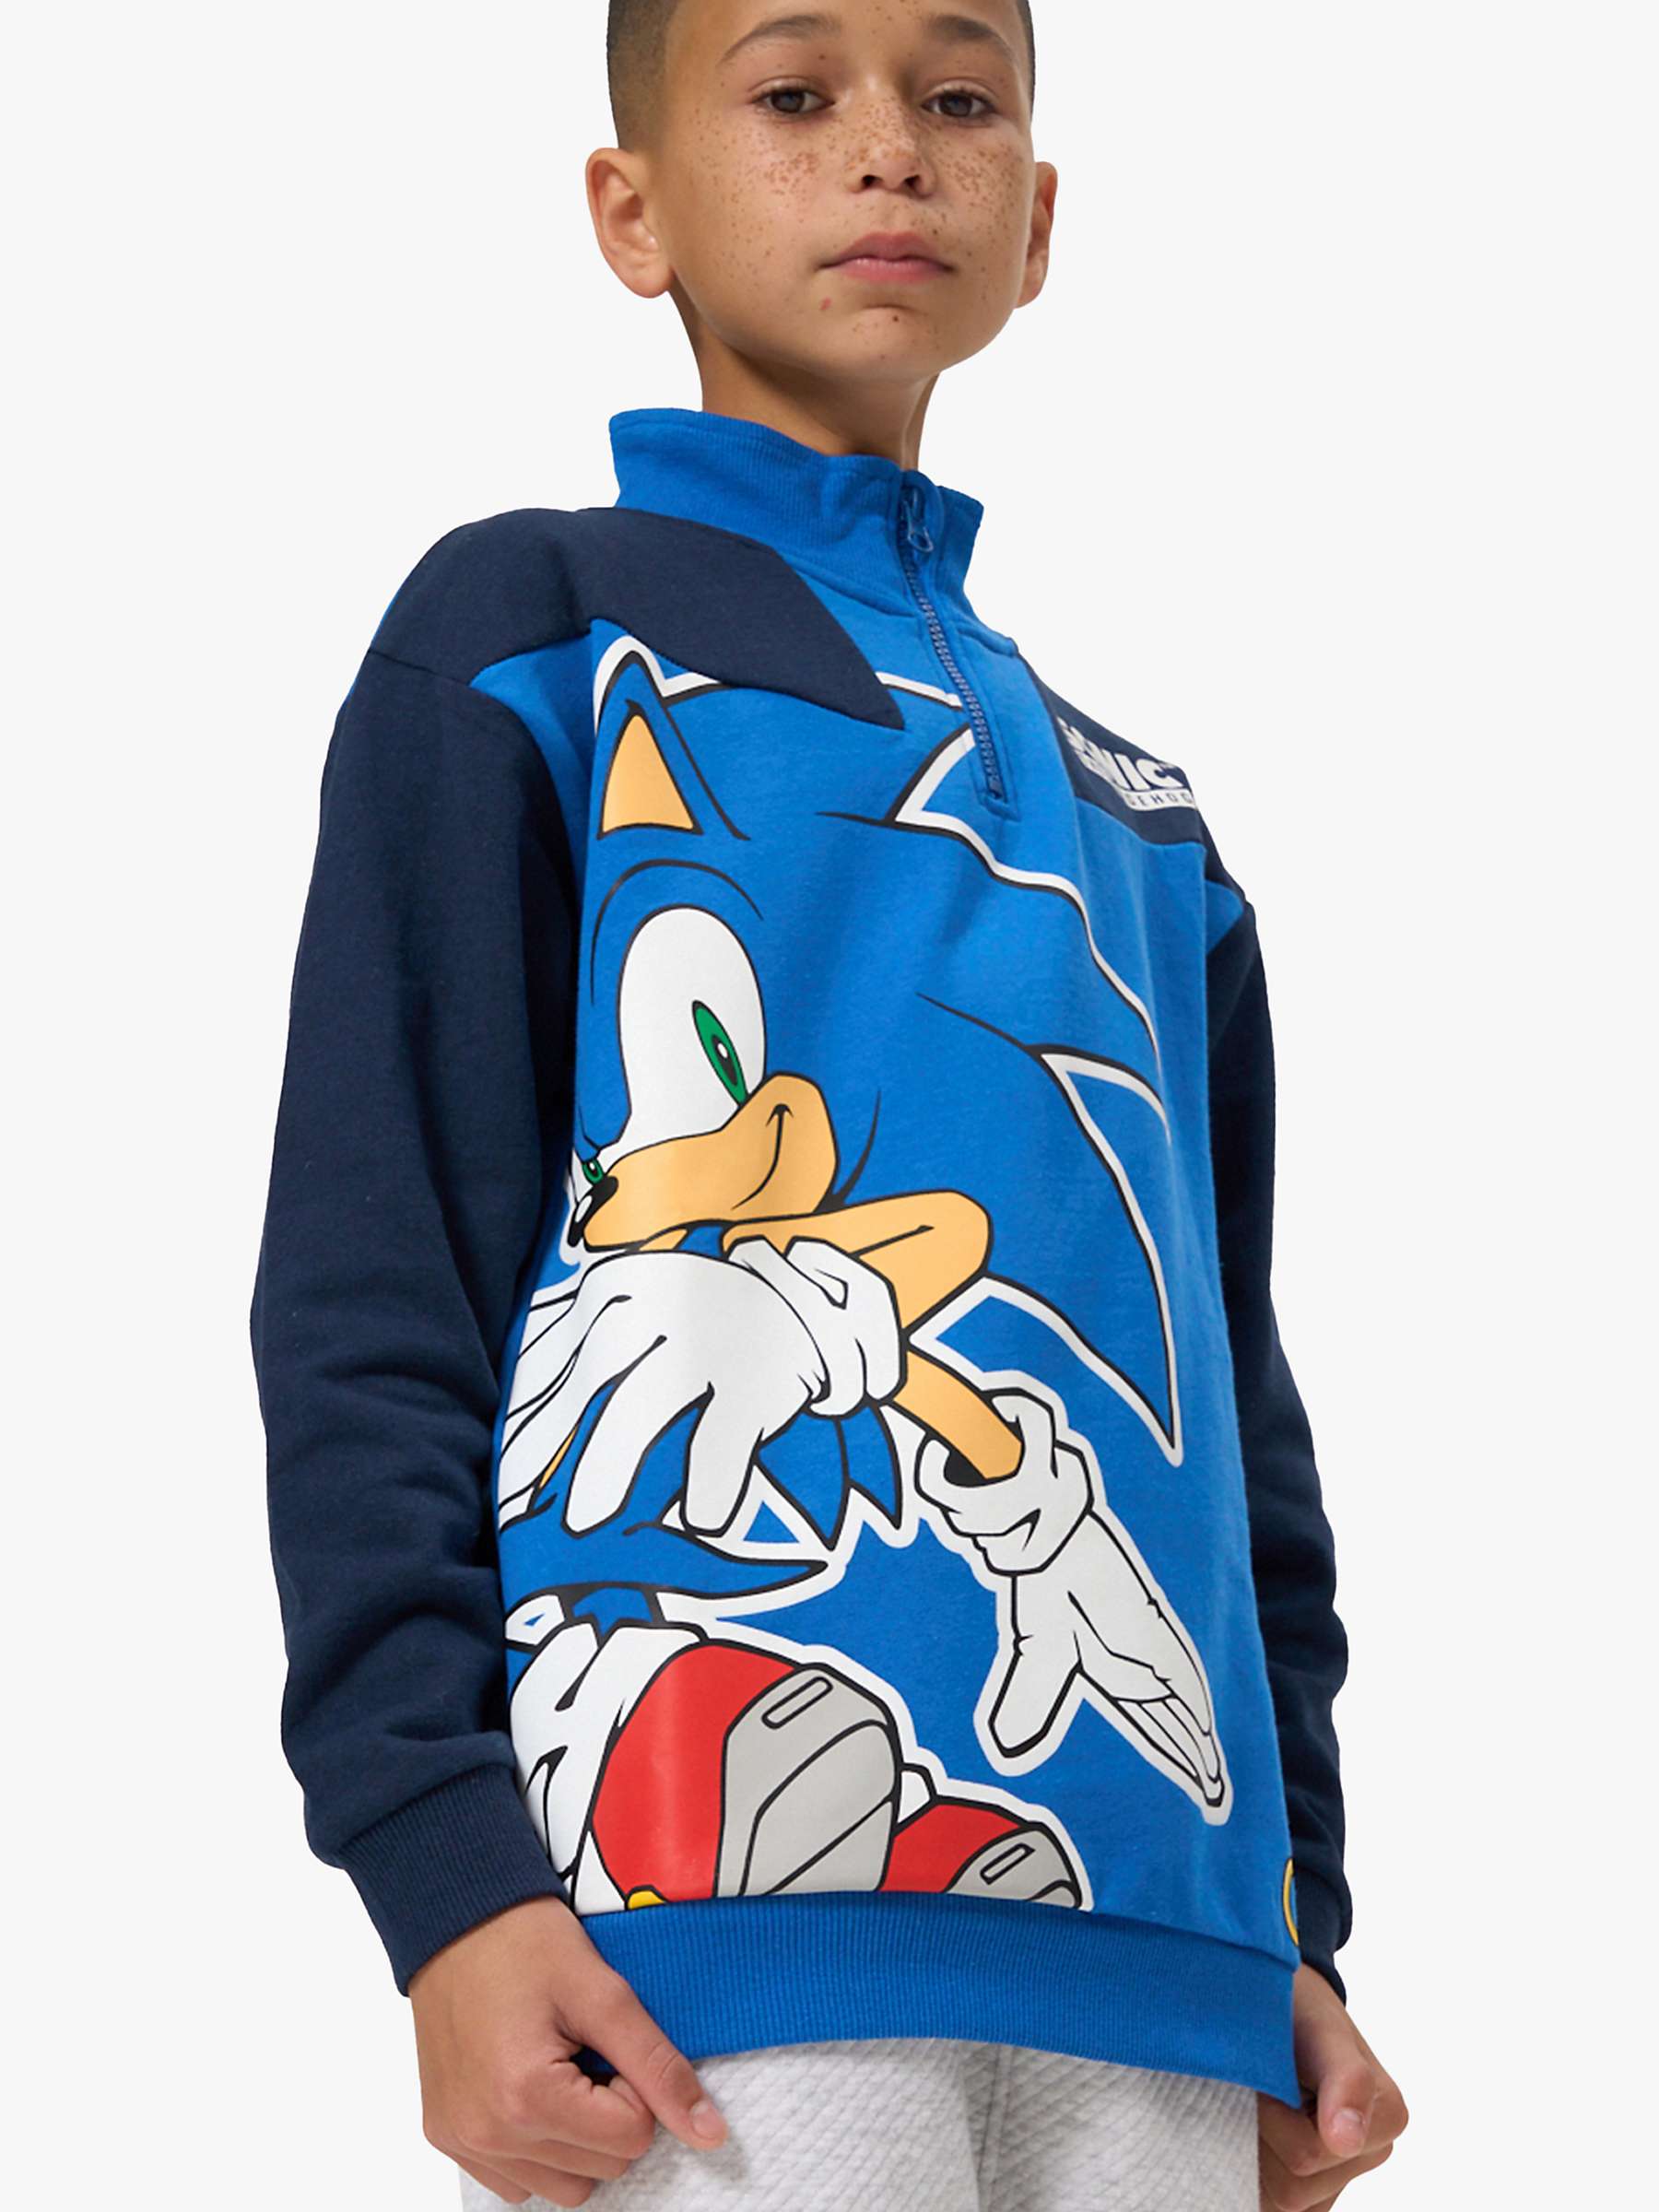 Buy Angel & Rocket Kids' Sonic Graphic Quart Zip Sweatshirt, Blue Online at johnlewis.com